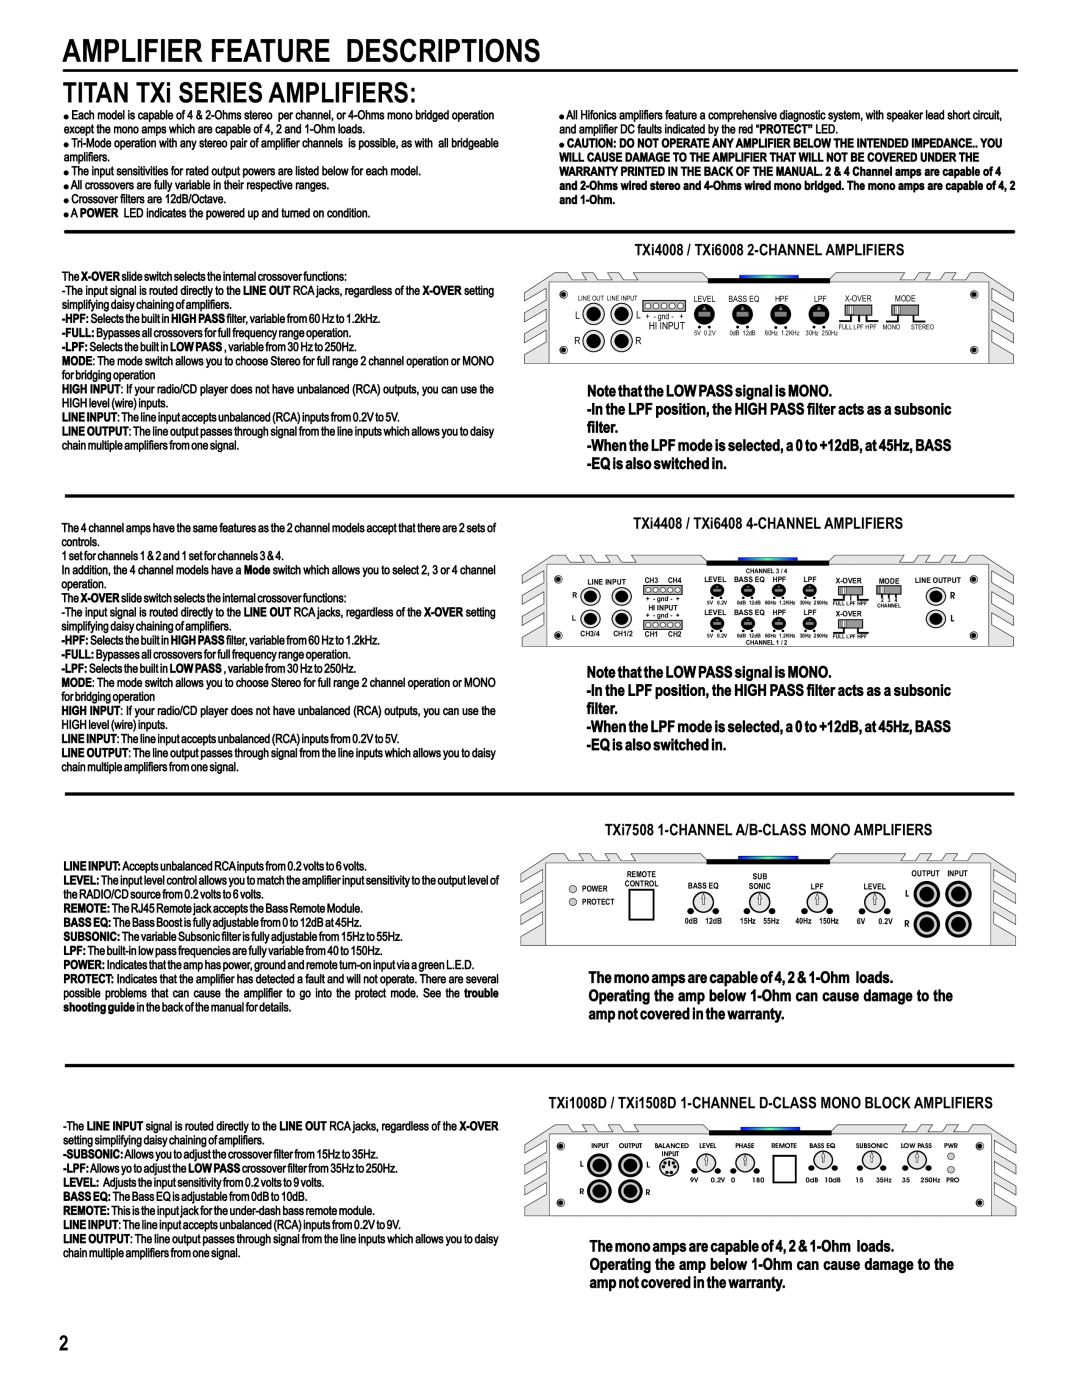 Maxxsonics TXi4408, TXi7508, TXi6408, TXi4008, TXi15080, TXi6008 Amplifier Feature Descriptions, TITAN TXi SERIES AMPLIFIERS 